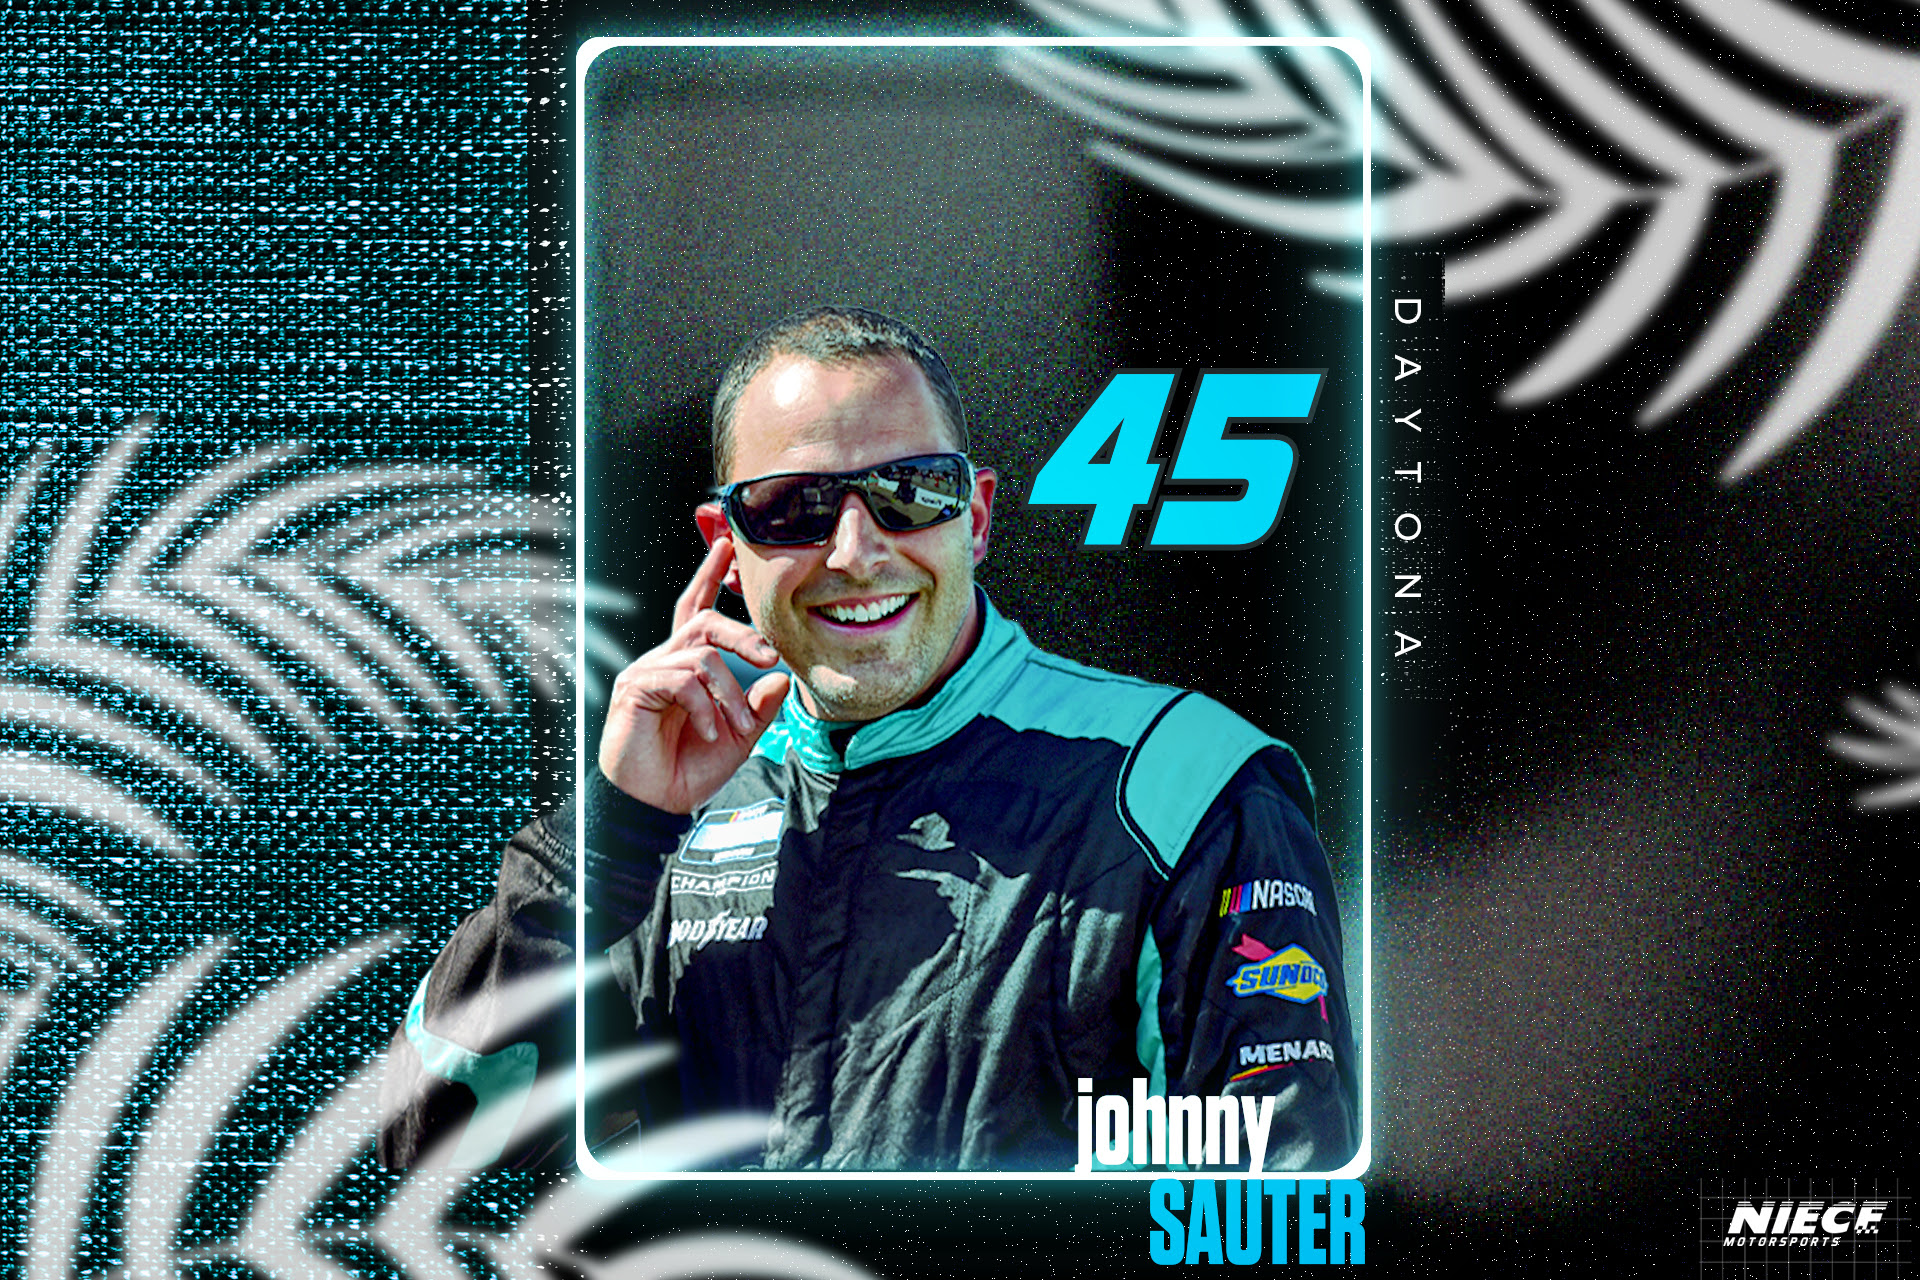 Johnny Sauter – Fresh From Florida 250 Race Advance